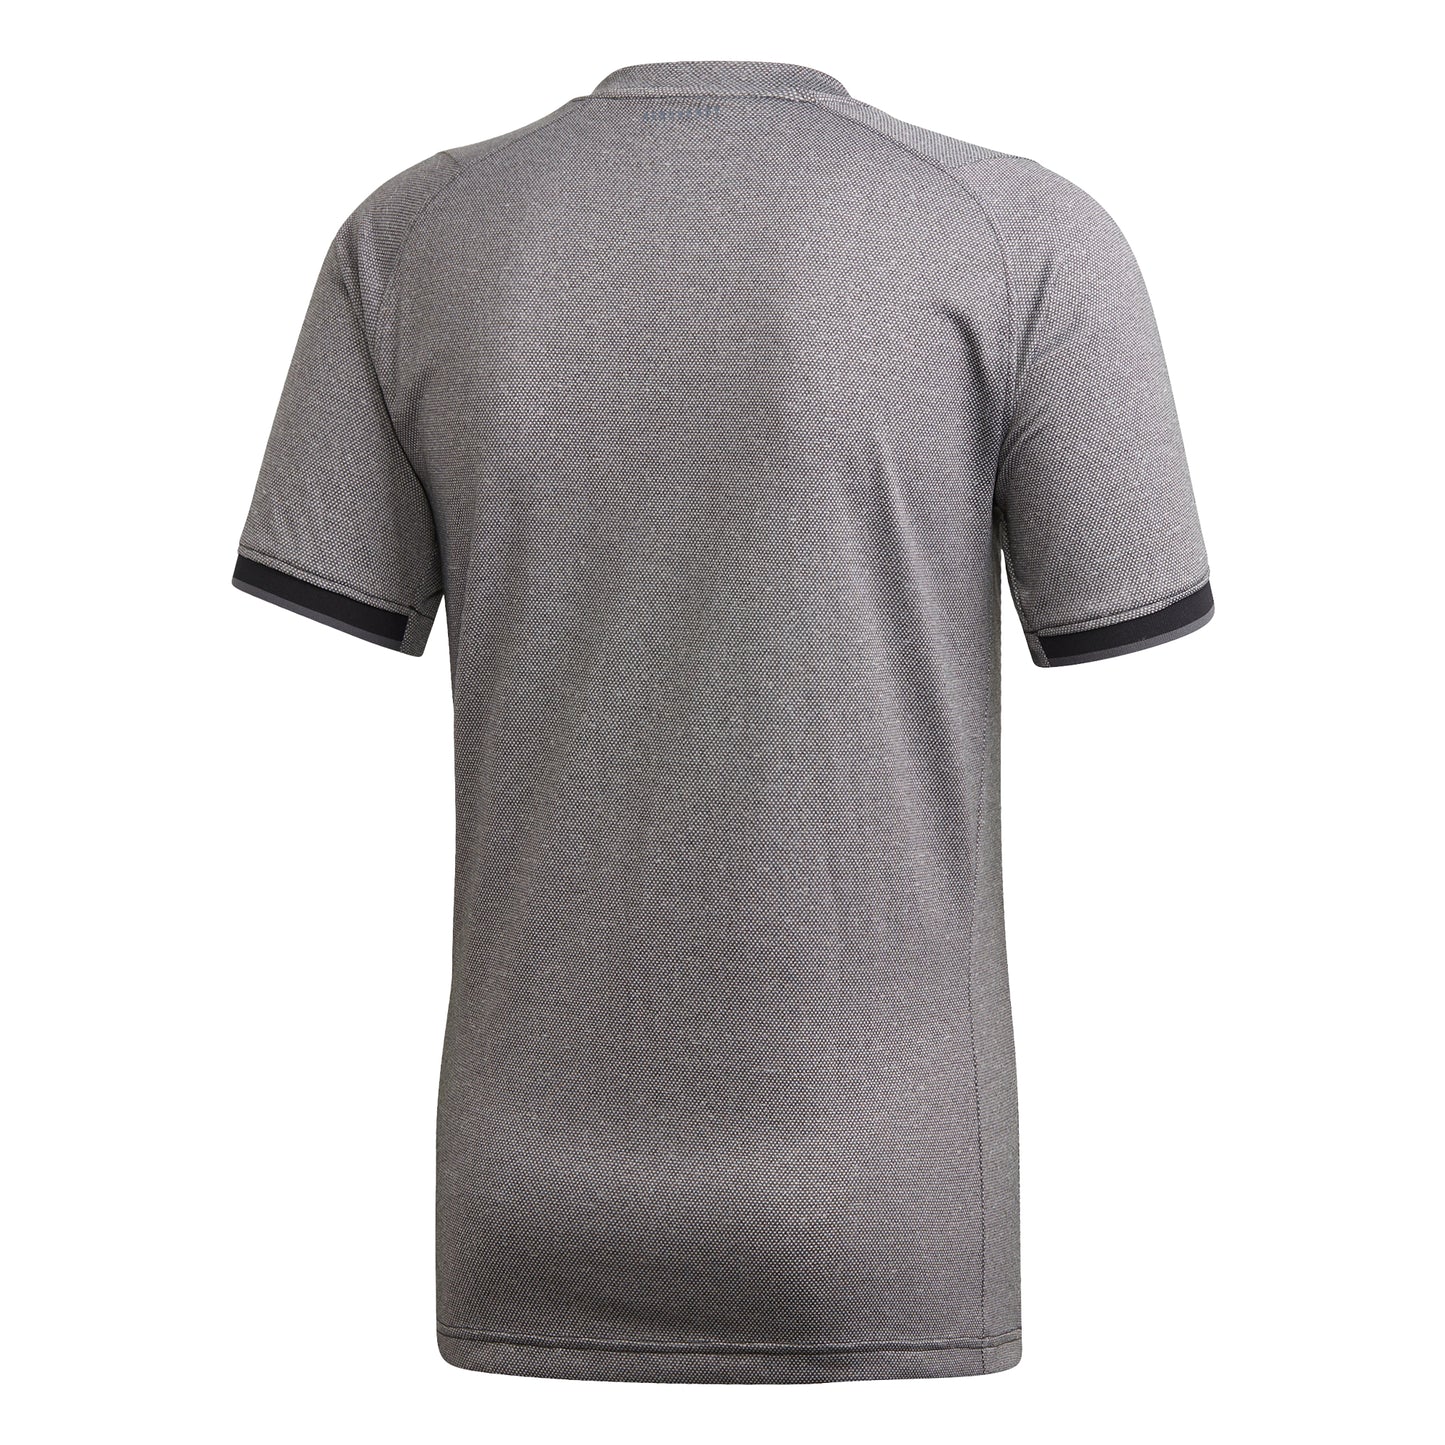 adidas Men's T-shirt FreeLift - Grey FP7967